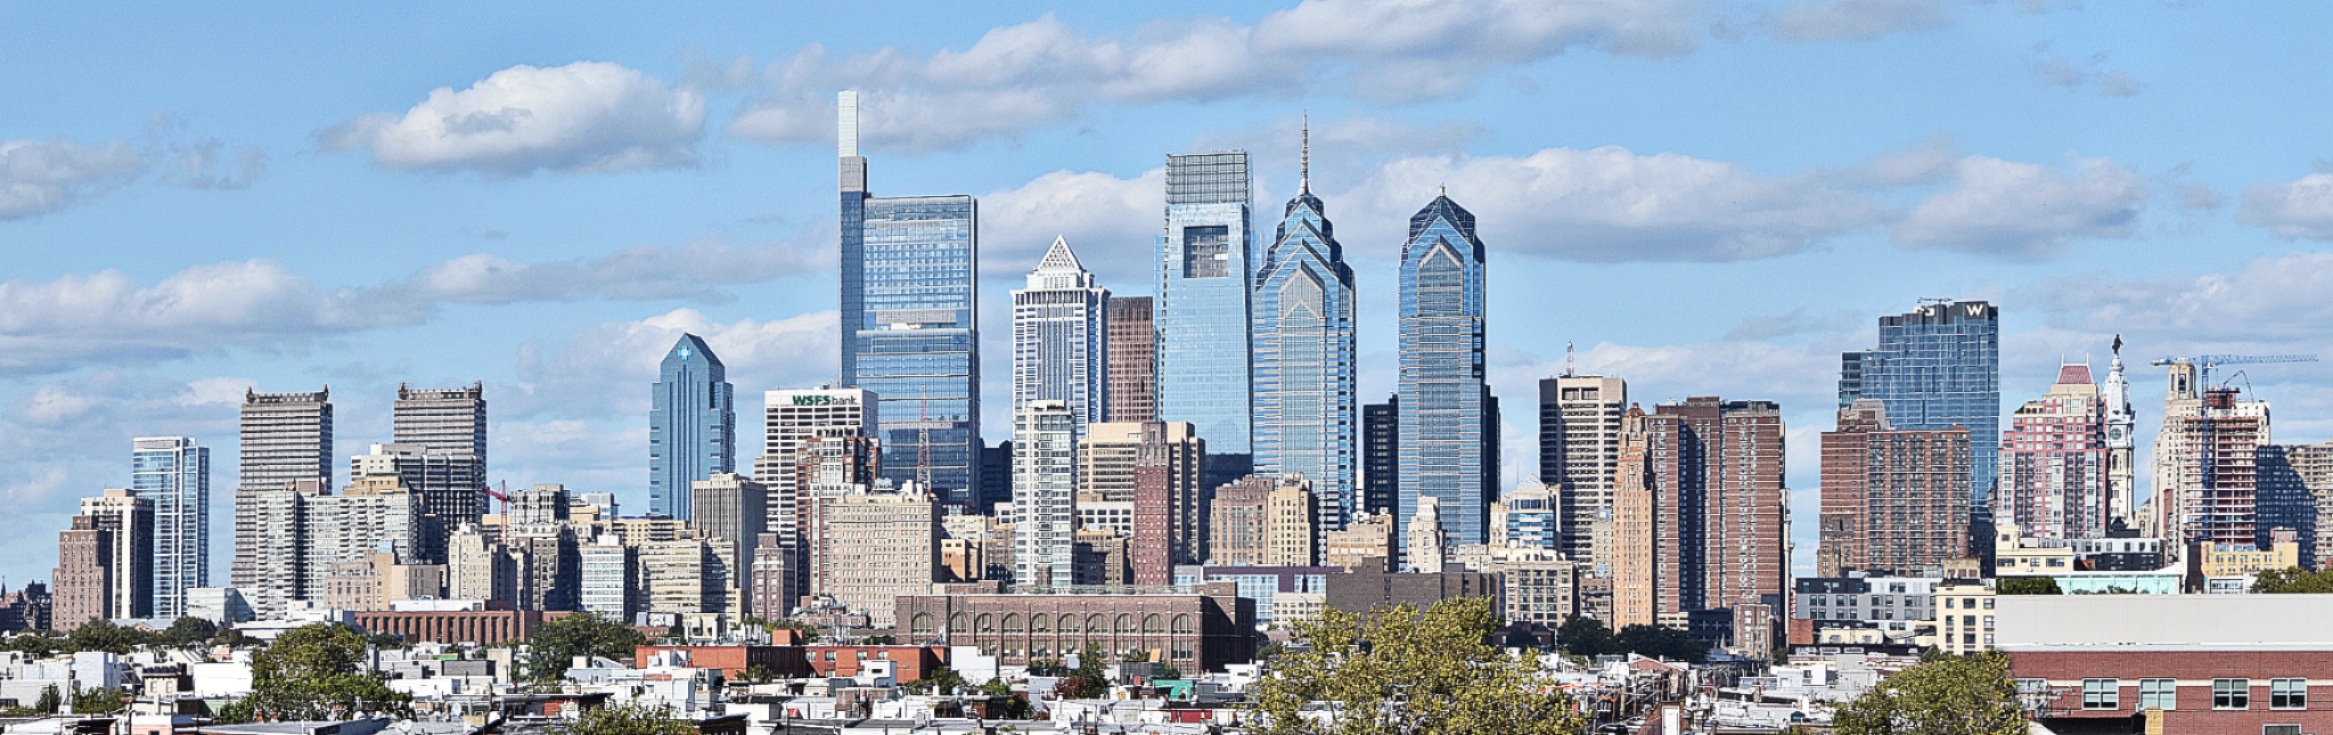 Arthaus joining the Philadelphia skyline from South Philadelphia. Photo by Thomas Koloski